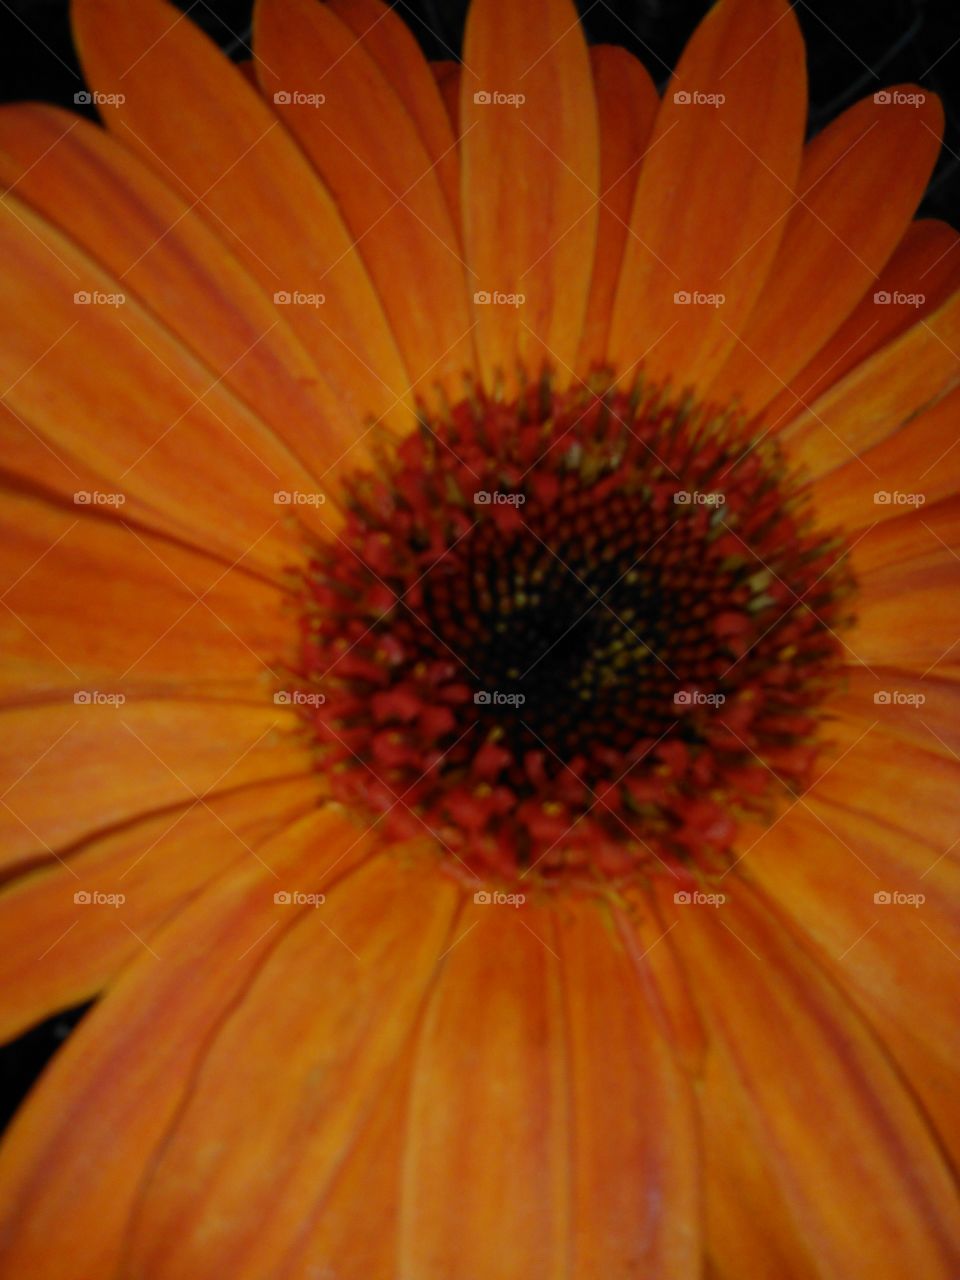 Orange gerbera daisy. Close-up shot of a beautiful orange gerbera daisy.